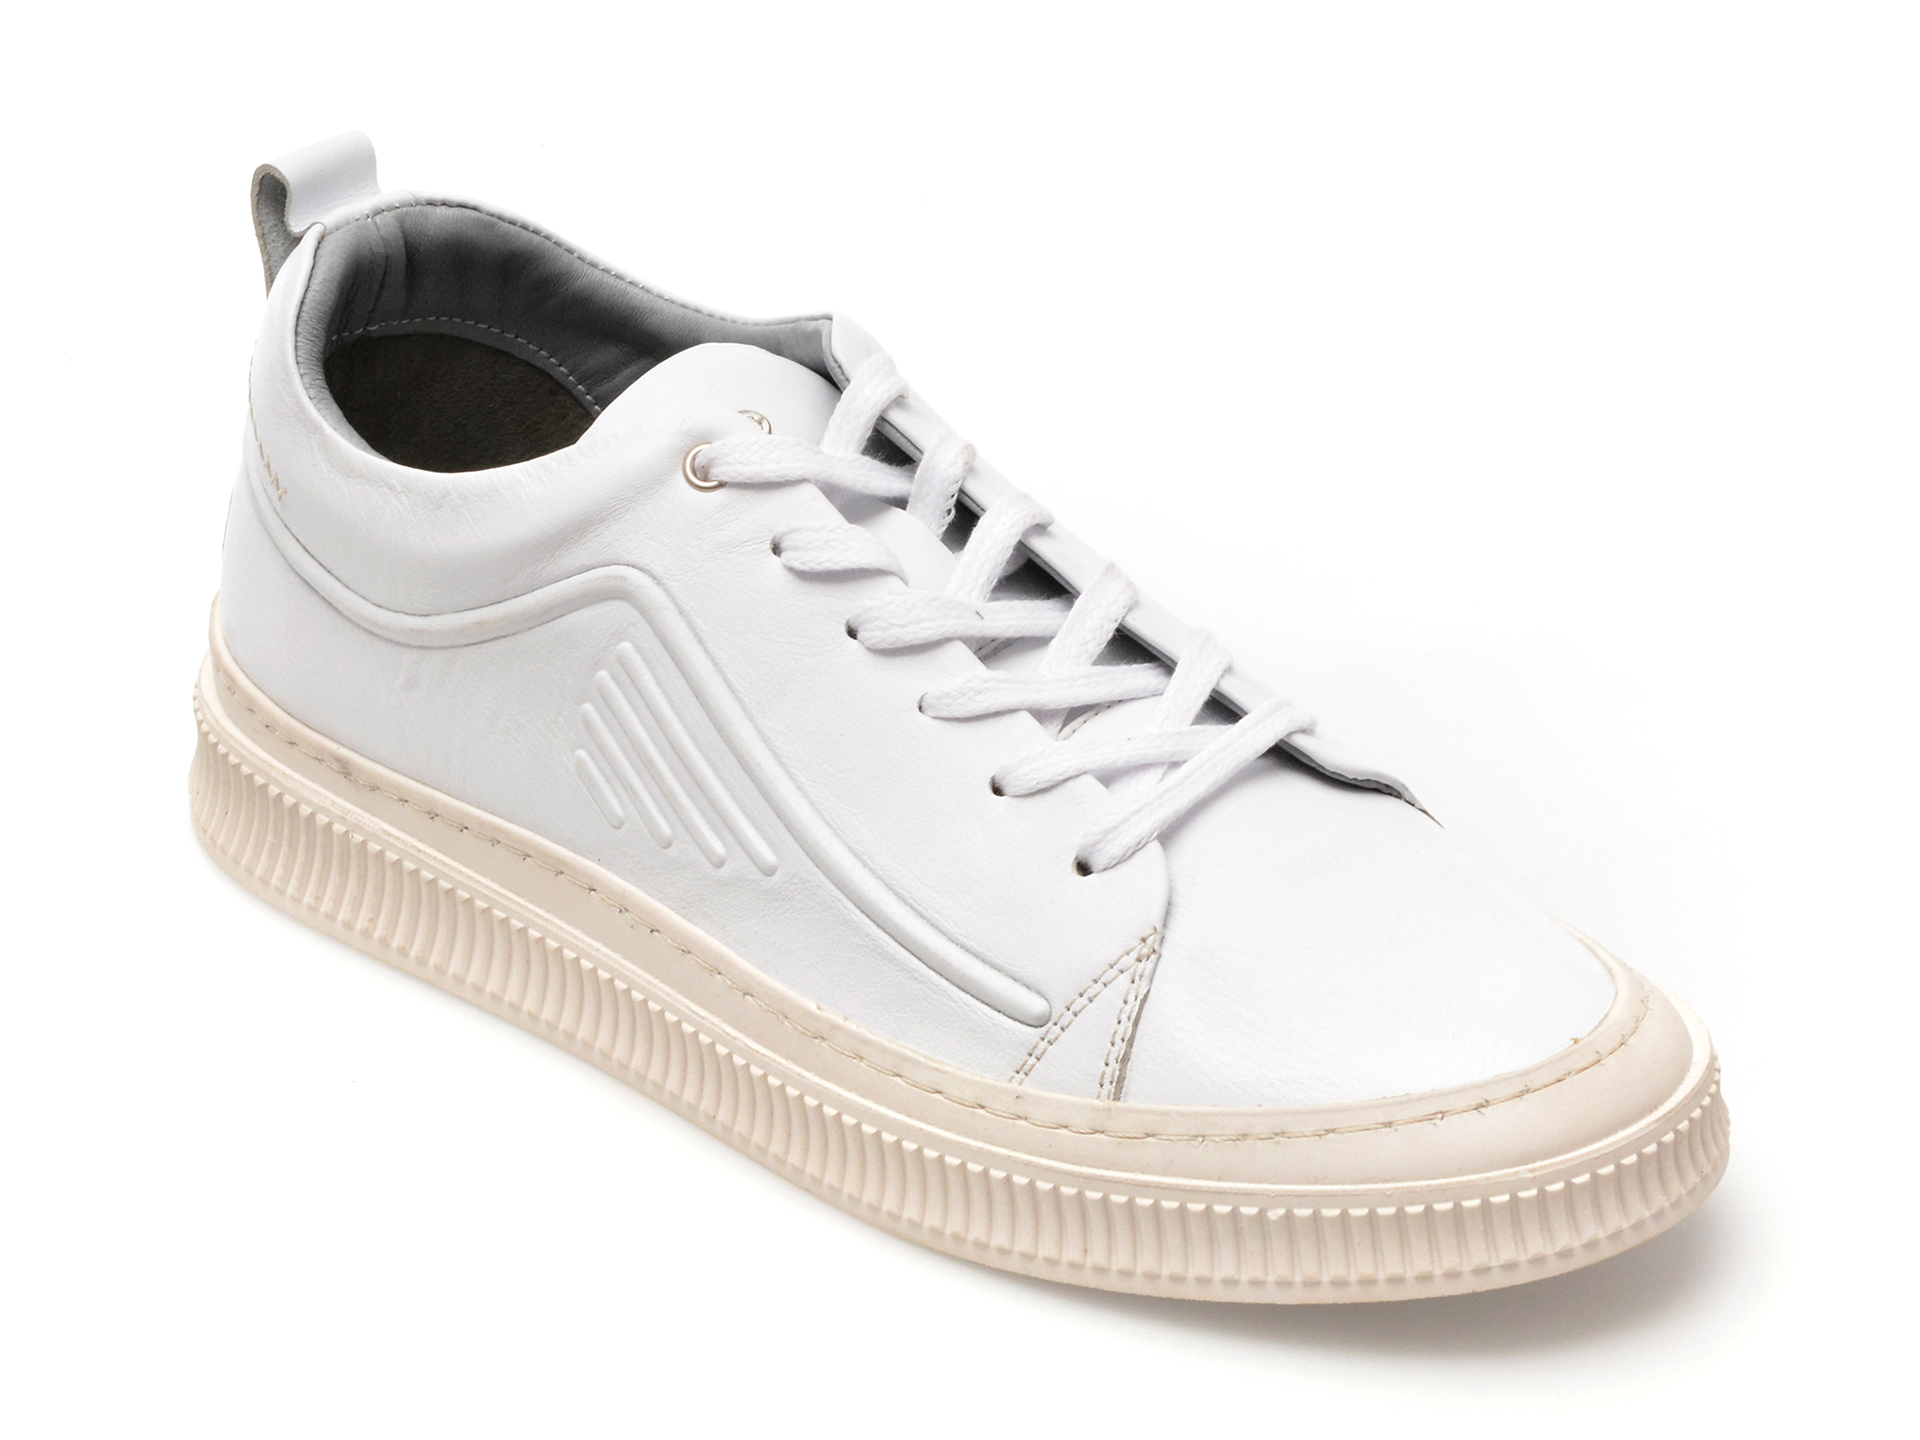 Pantofi INCI albi, CVK2804, din piele naturala /barbati/pantofi